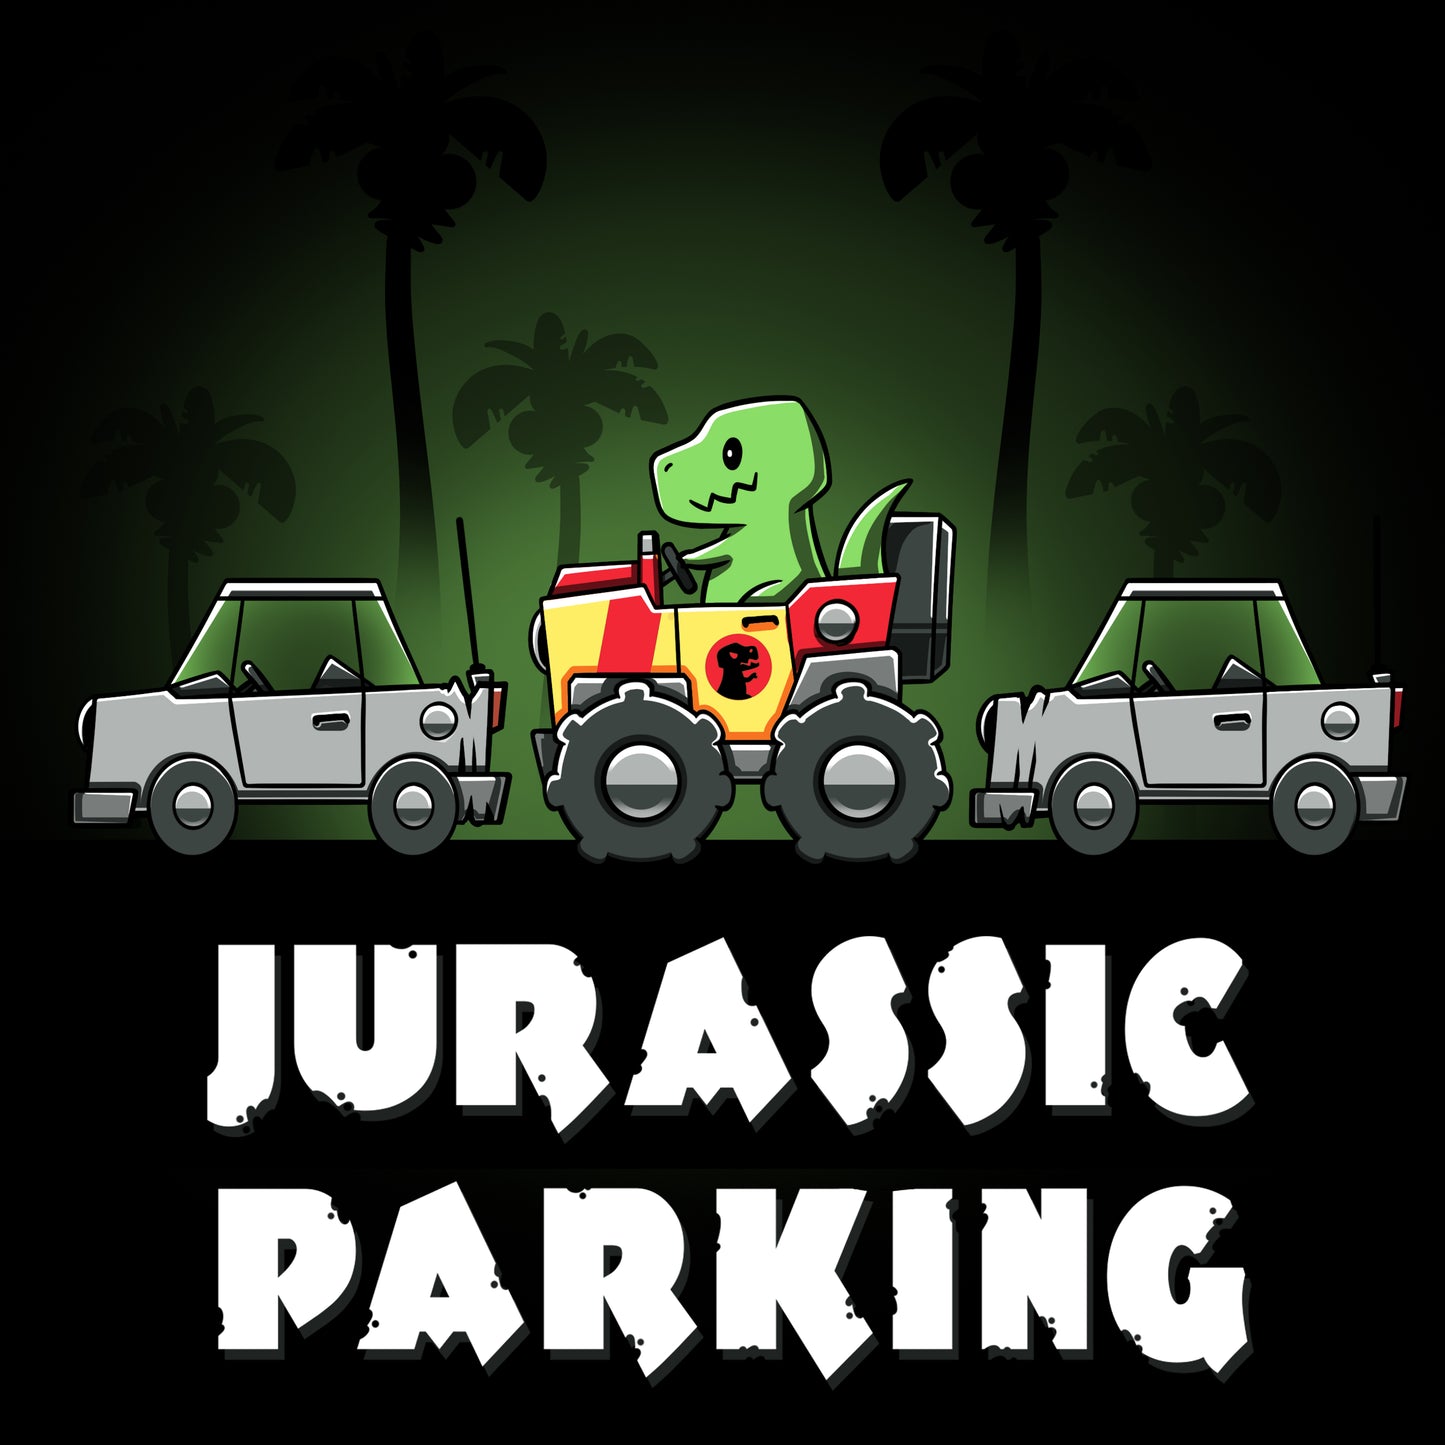 Thumbnail screenshot of a TeeTurtle Jurassic Parking T-shirt featuring dinos.